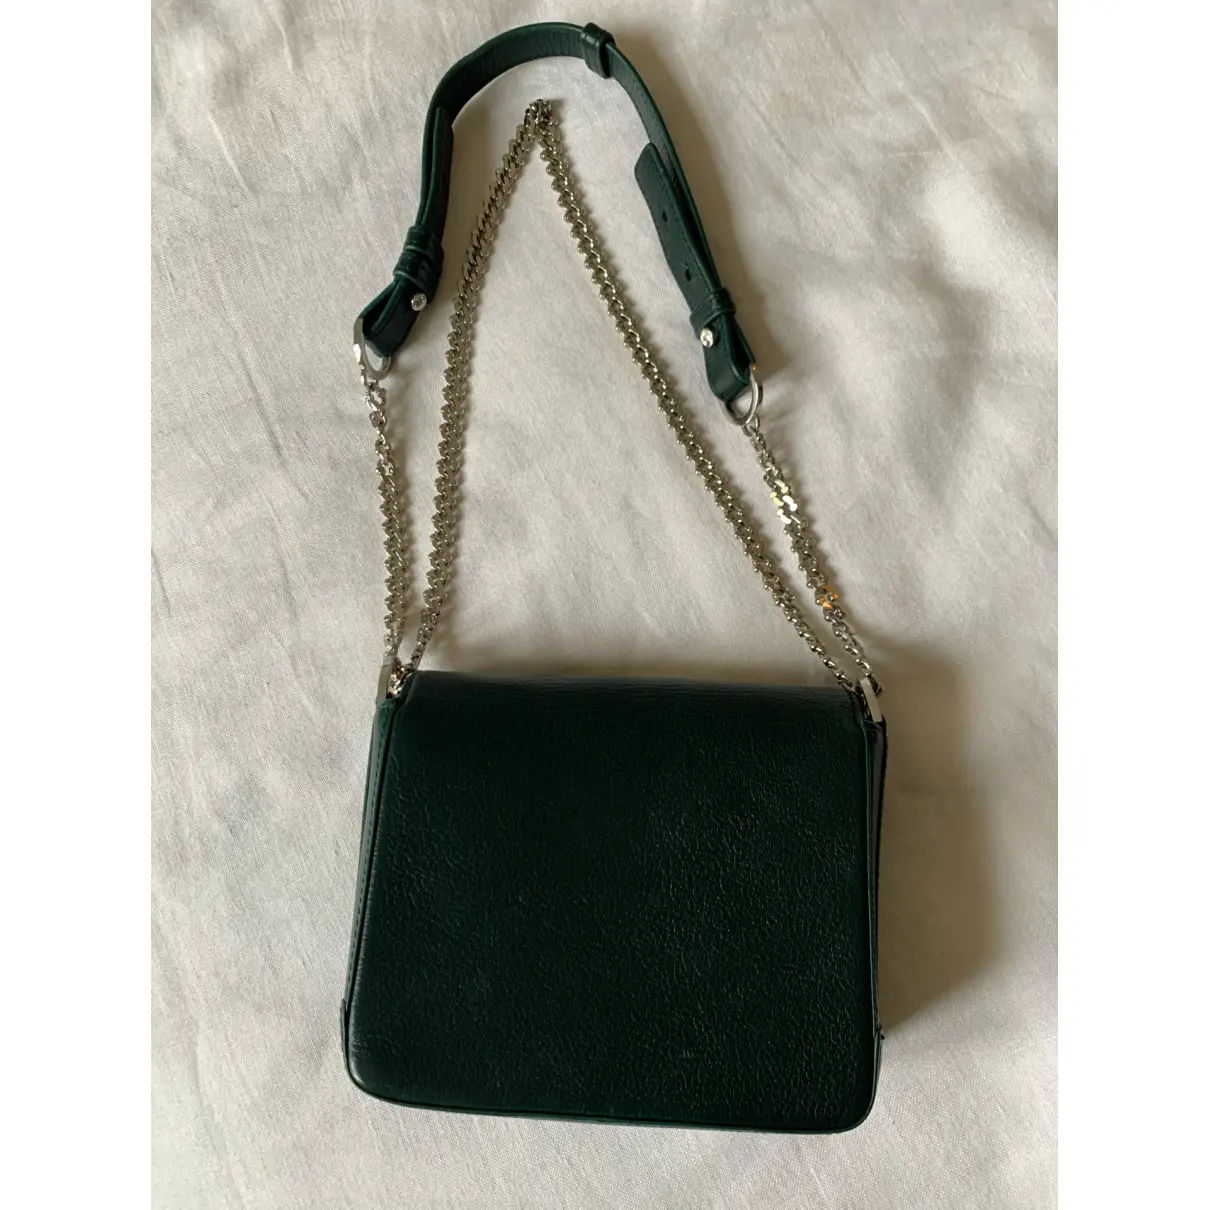 Buy Carven Leather crossbody bag online